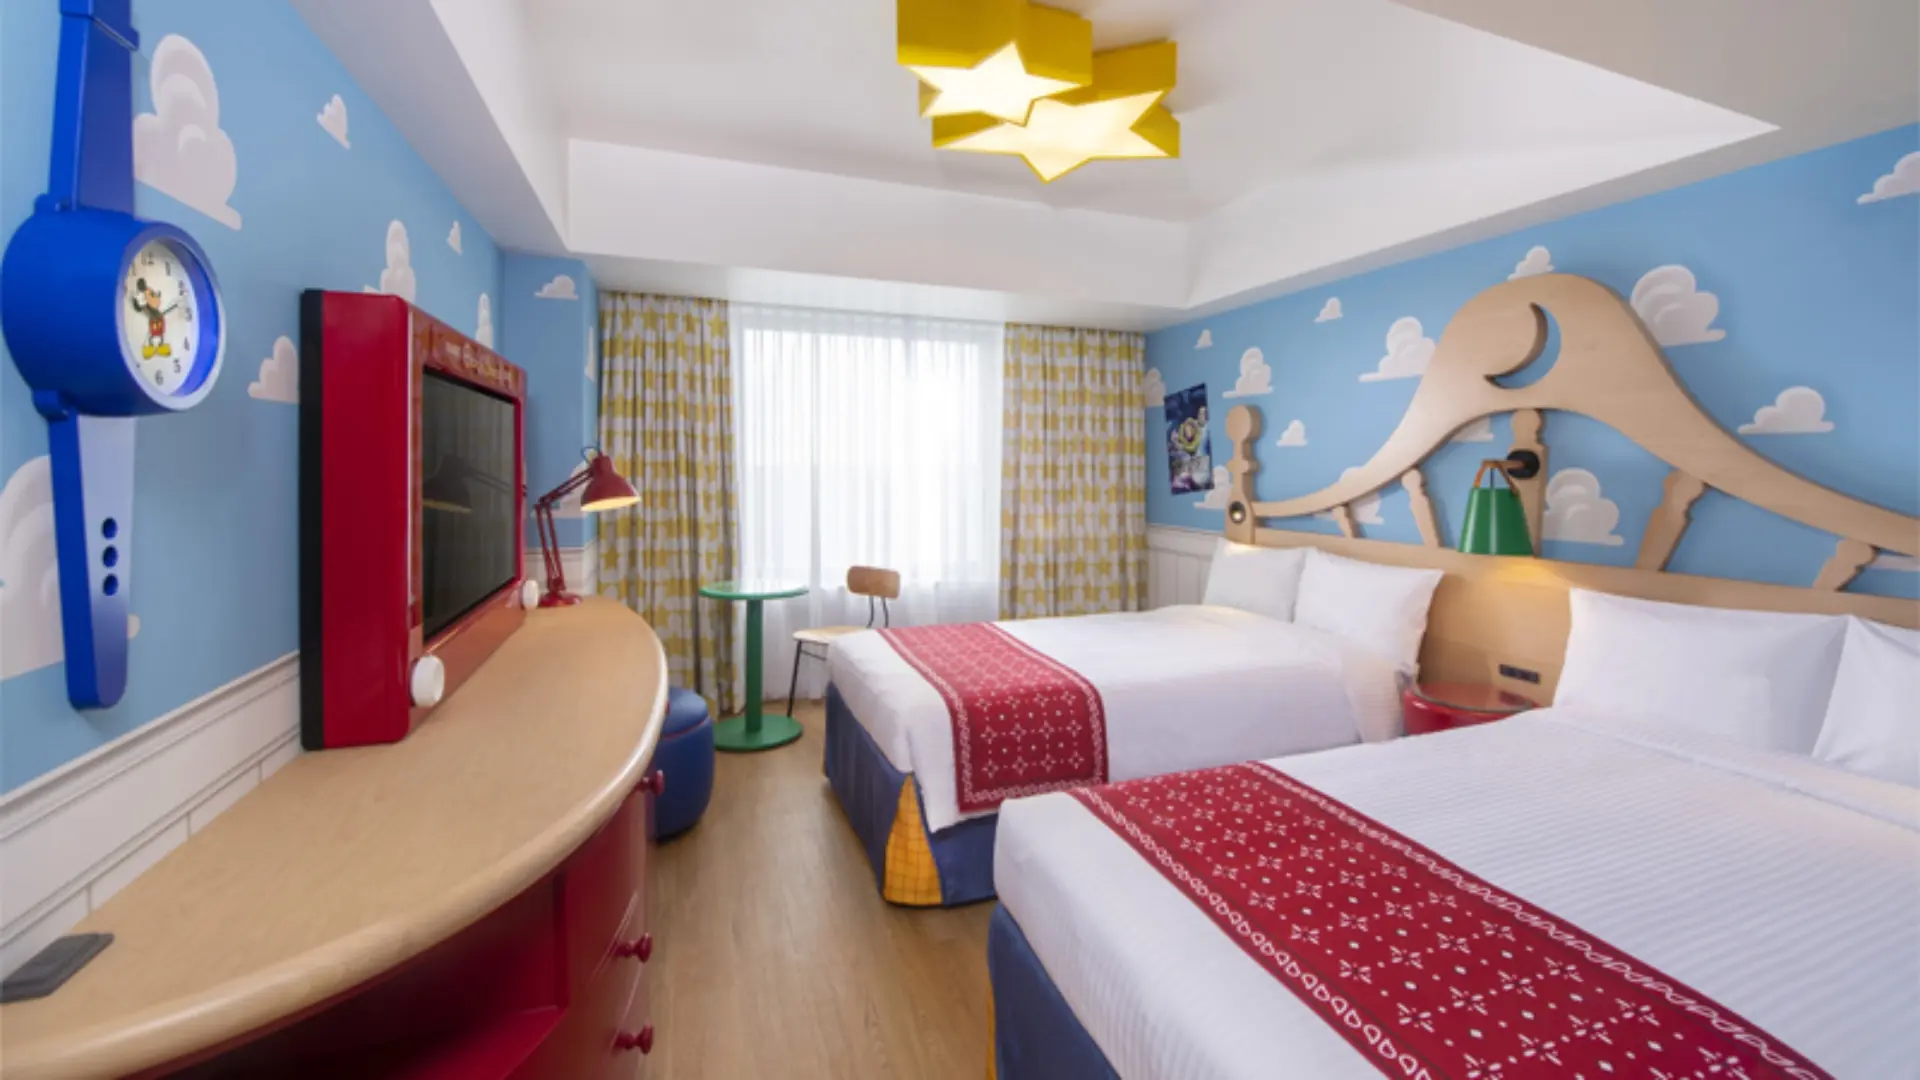 Así será el Toy Story Hotel